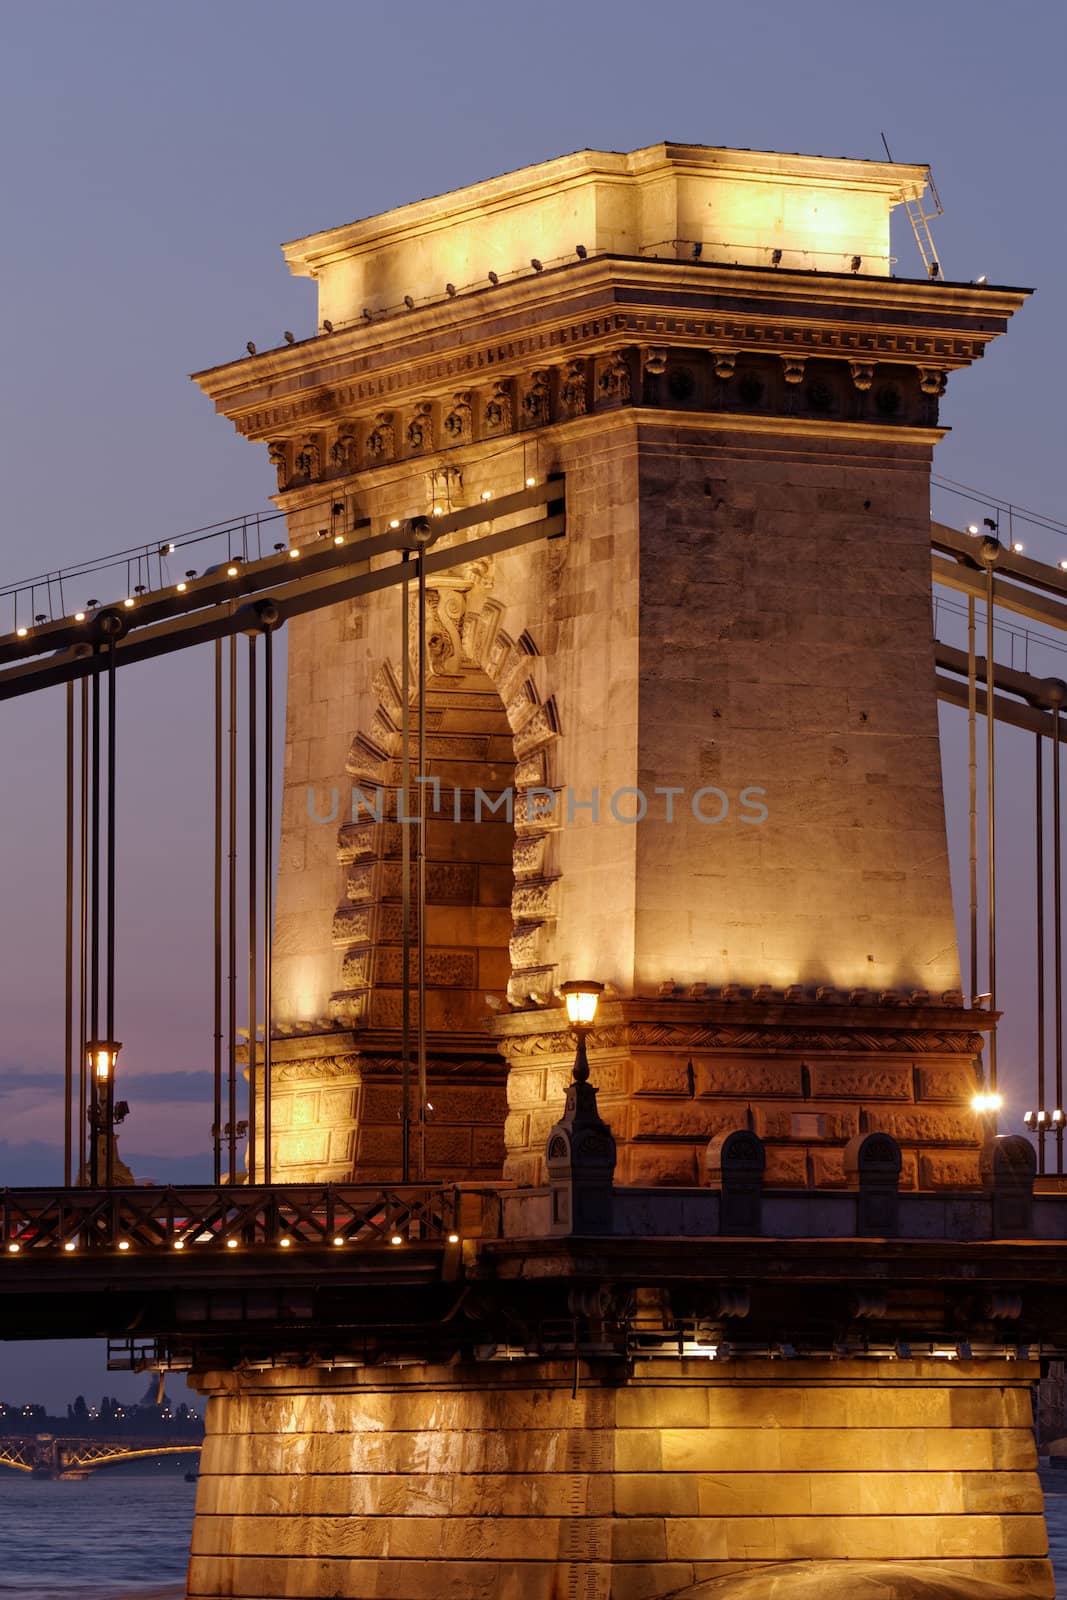 Night image with traffic of the hungarian chain Bridge